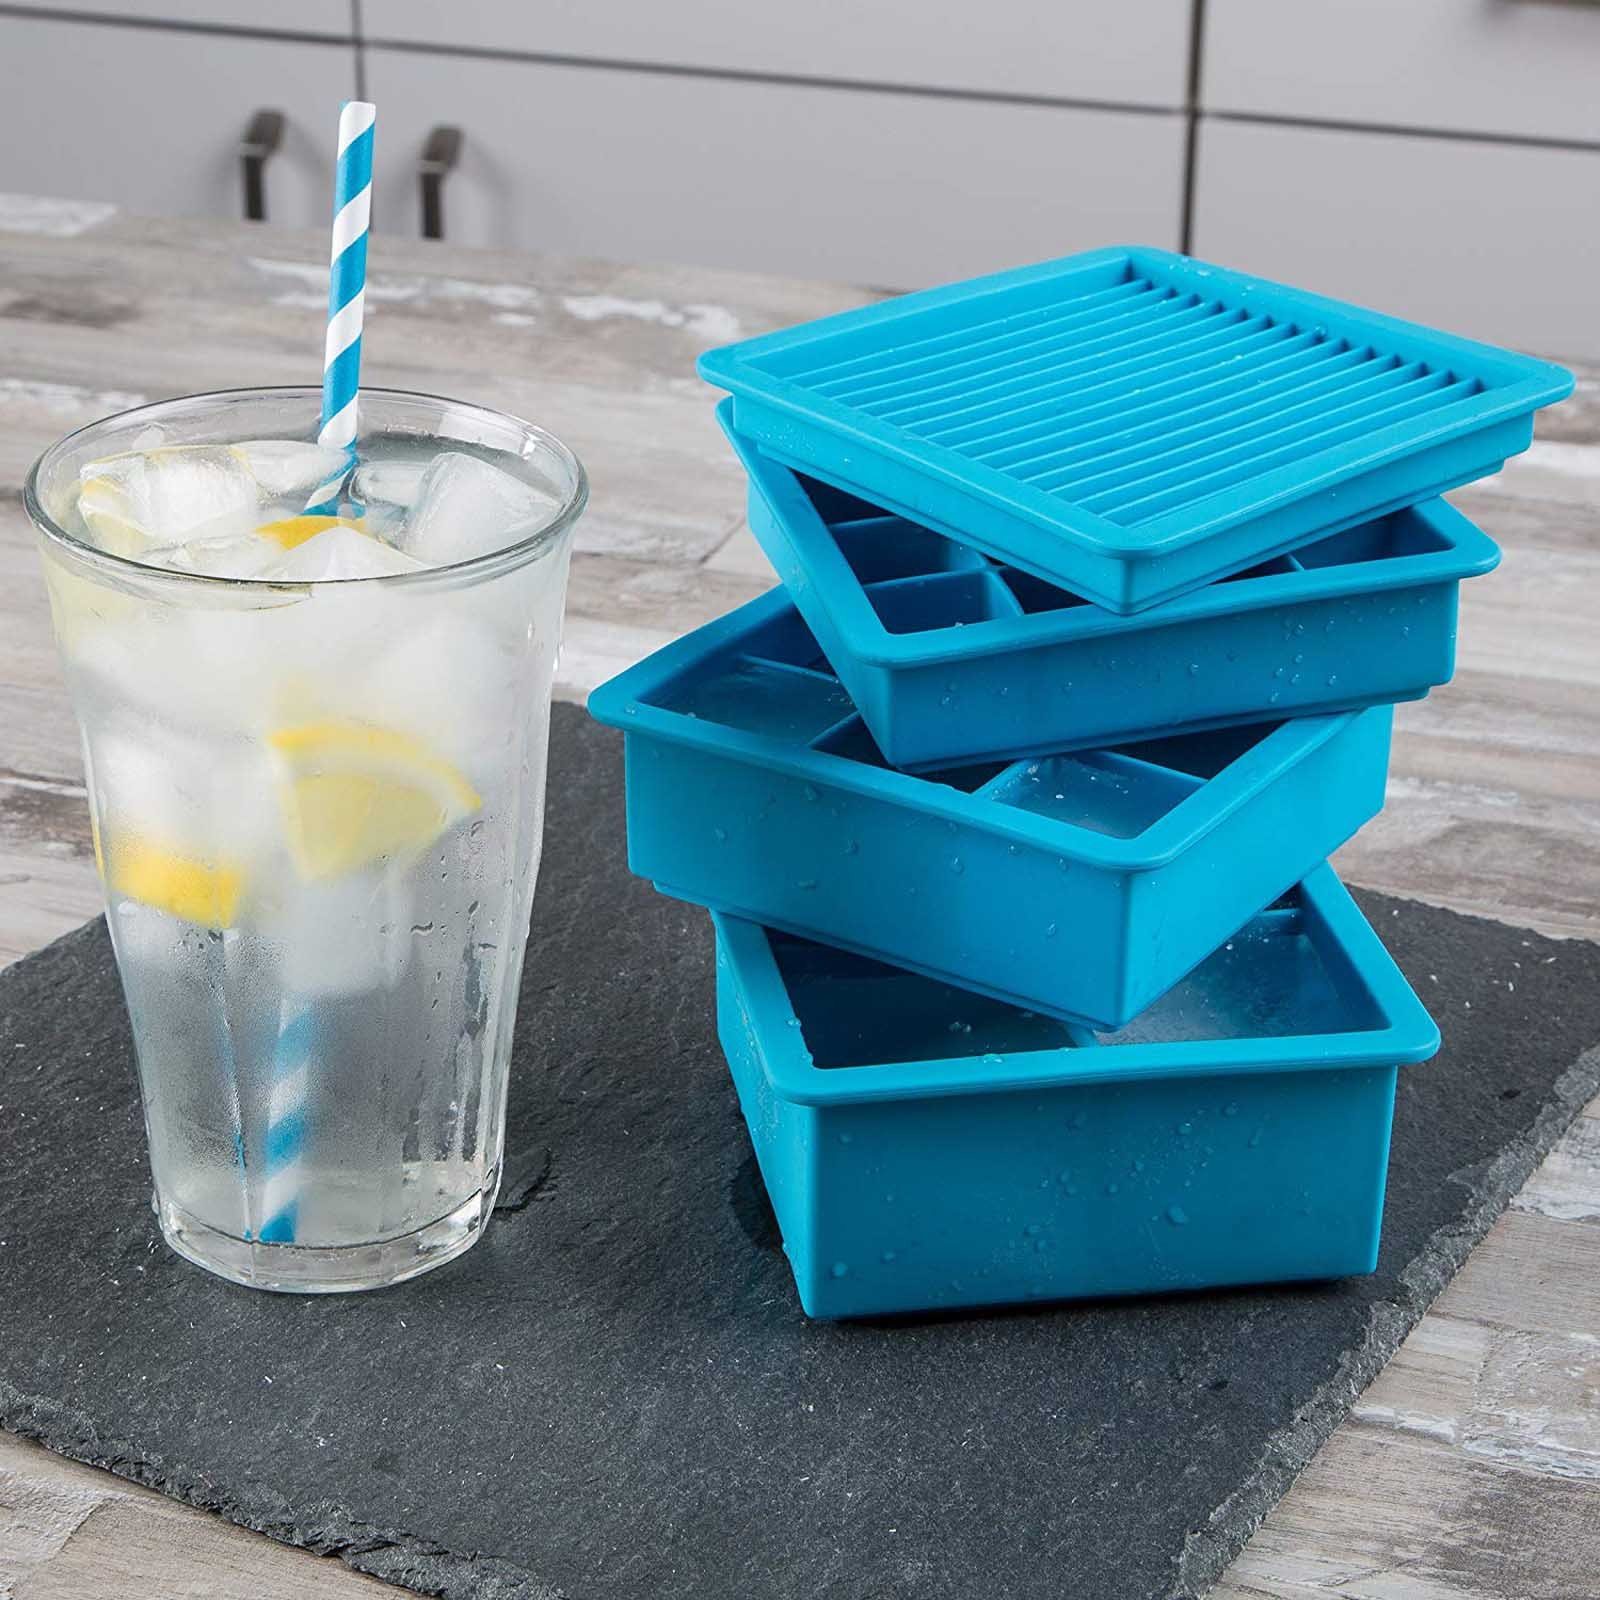 Eiswürfelform mit Eiswürfel 4 Eiswürfelbehälter Behältern Silikon Silikonform, Set Eiswürfelbereiter HAC24 aus teiliges